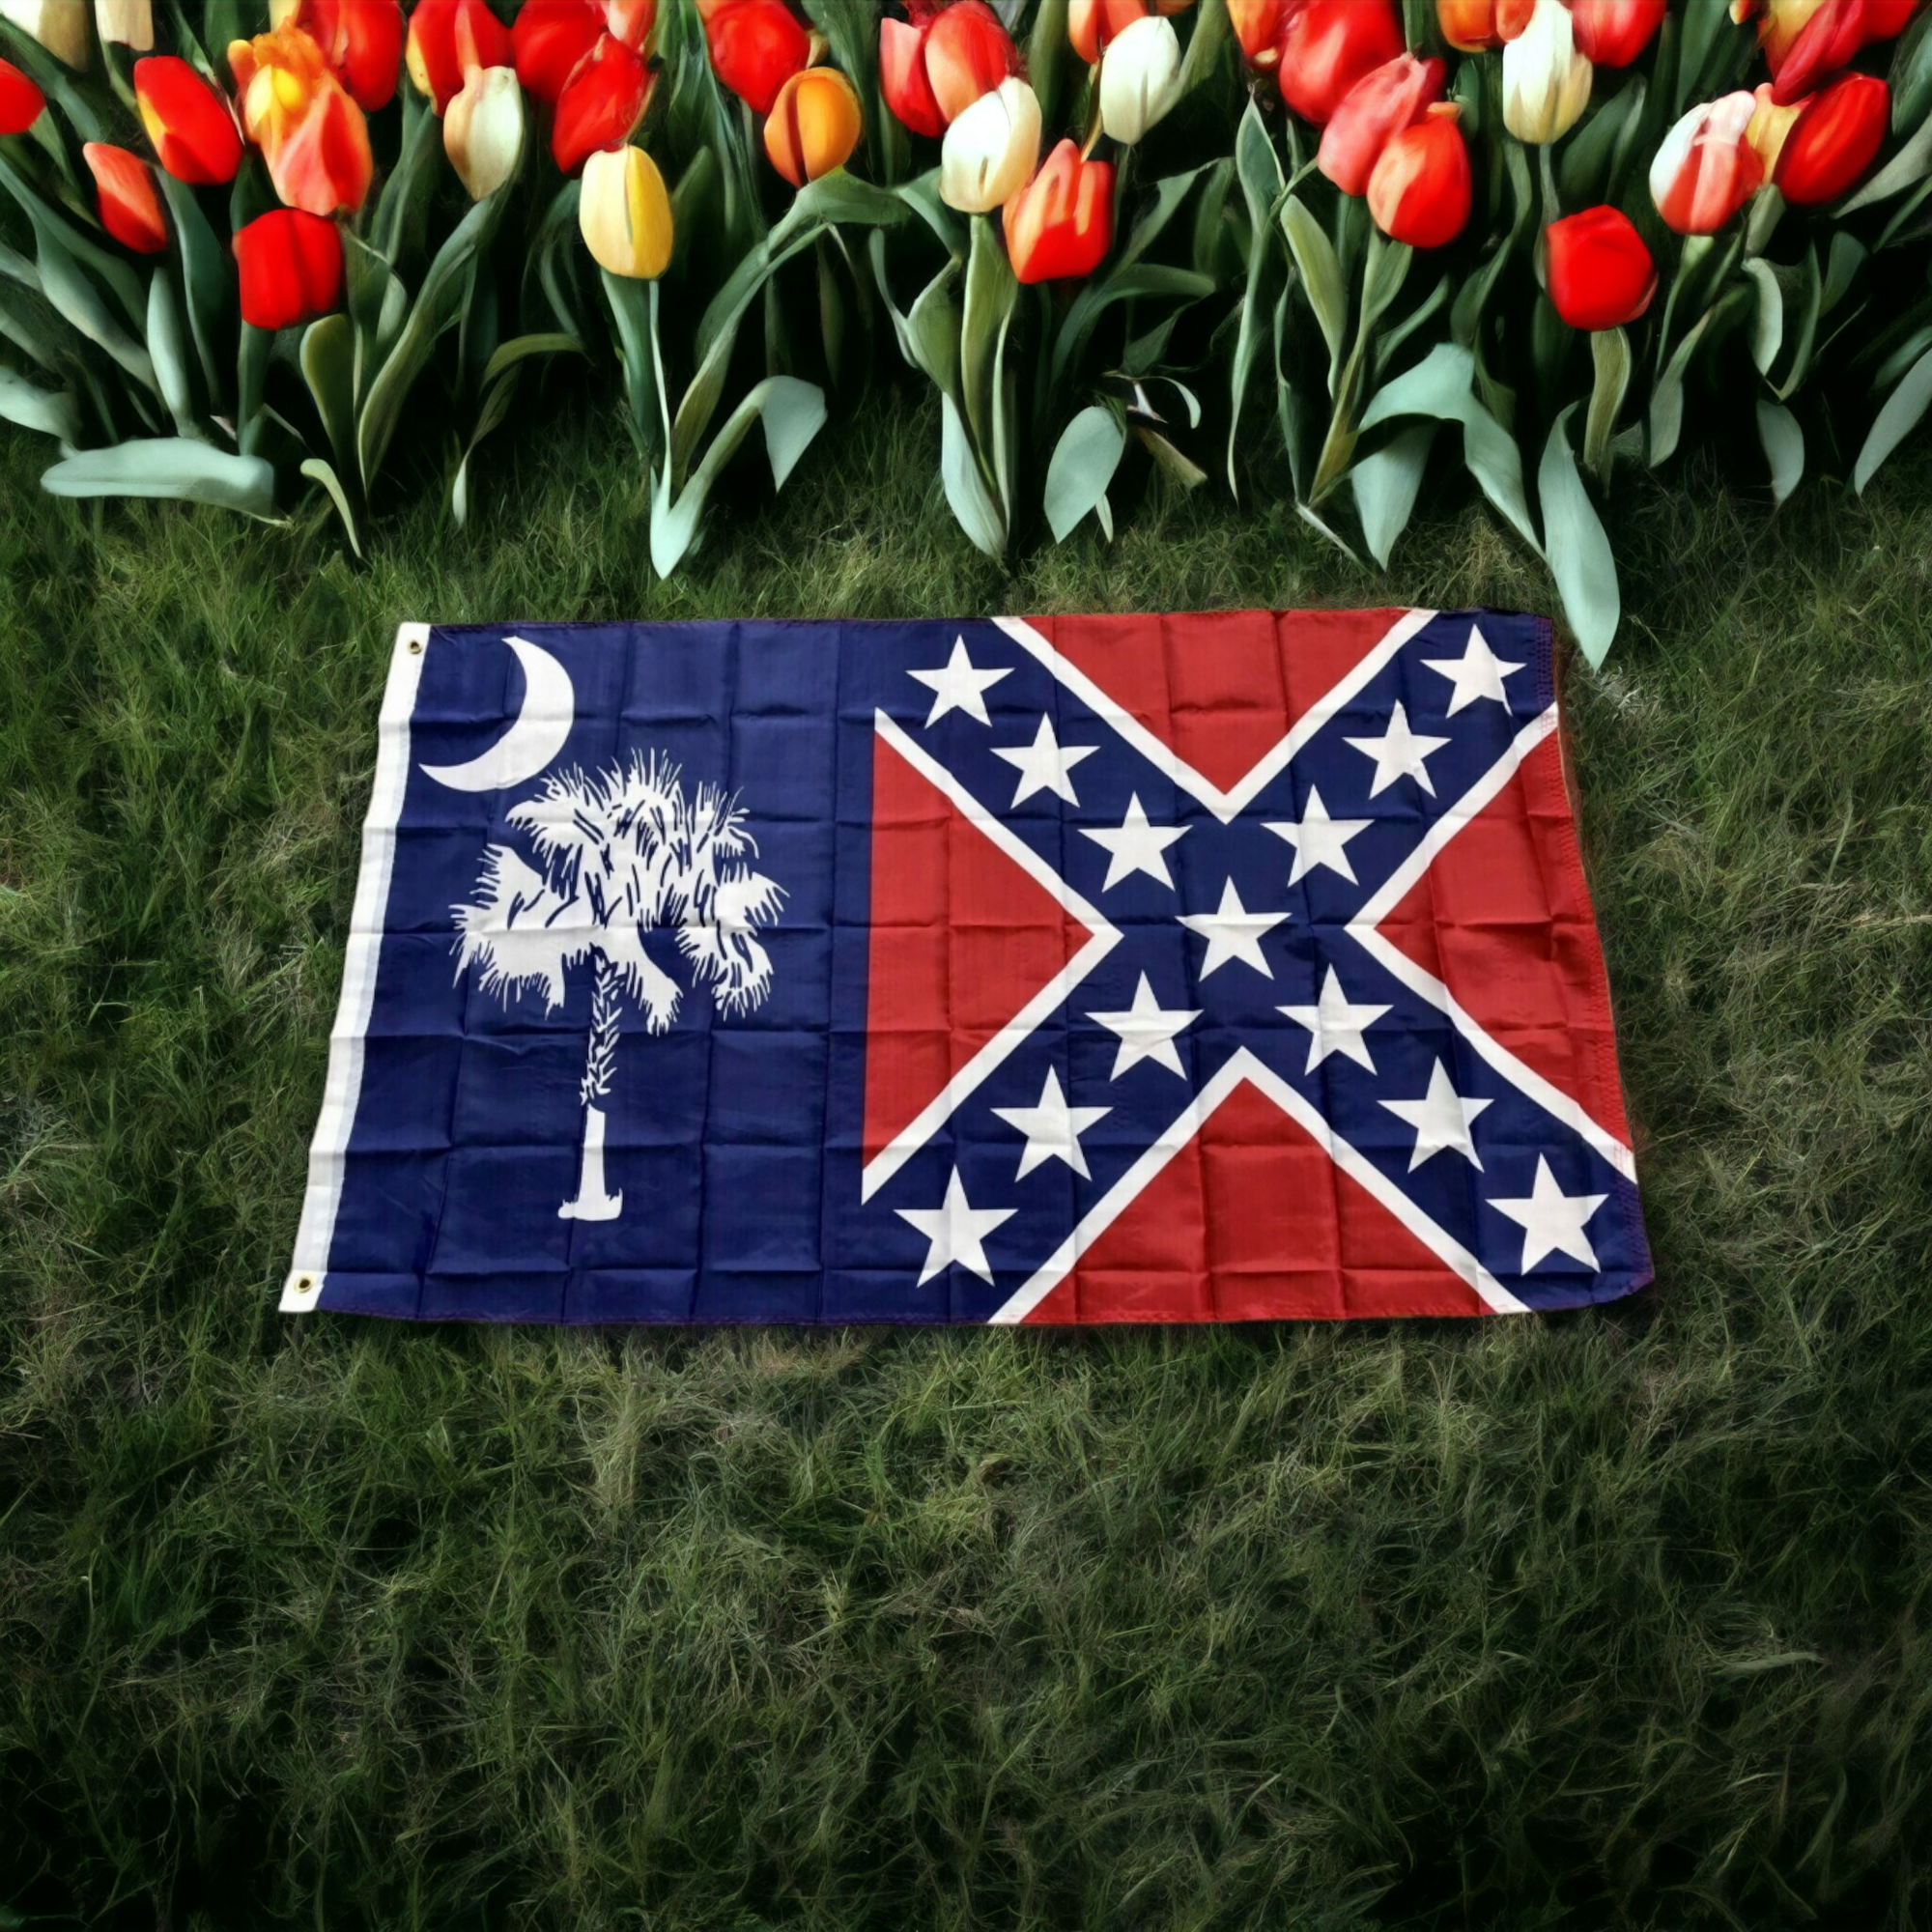 South Carolina / Battle Flag Combo